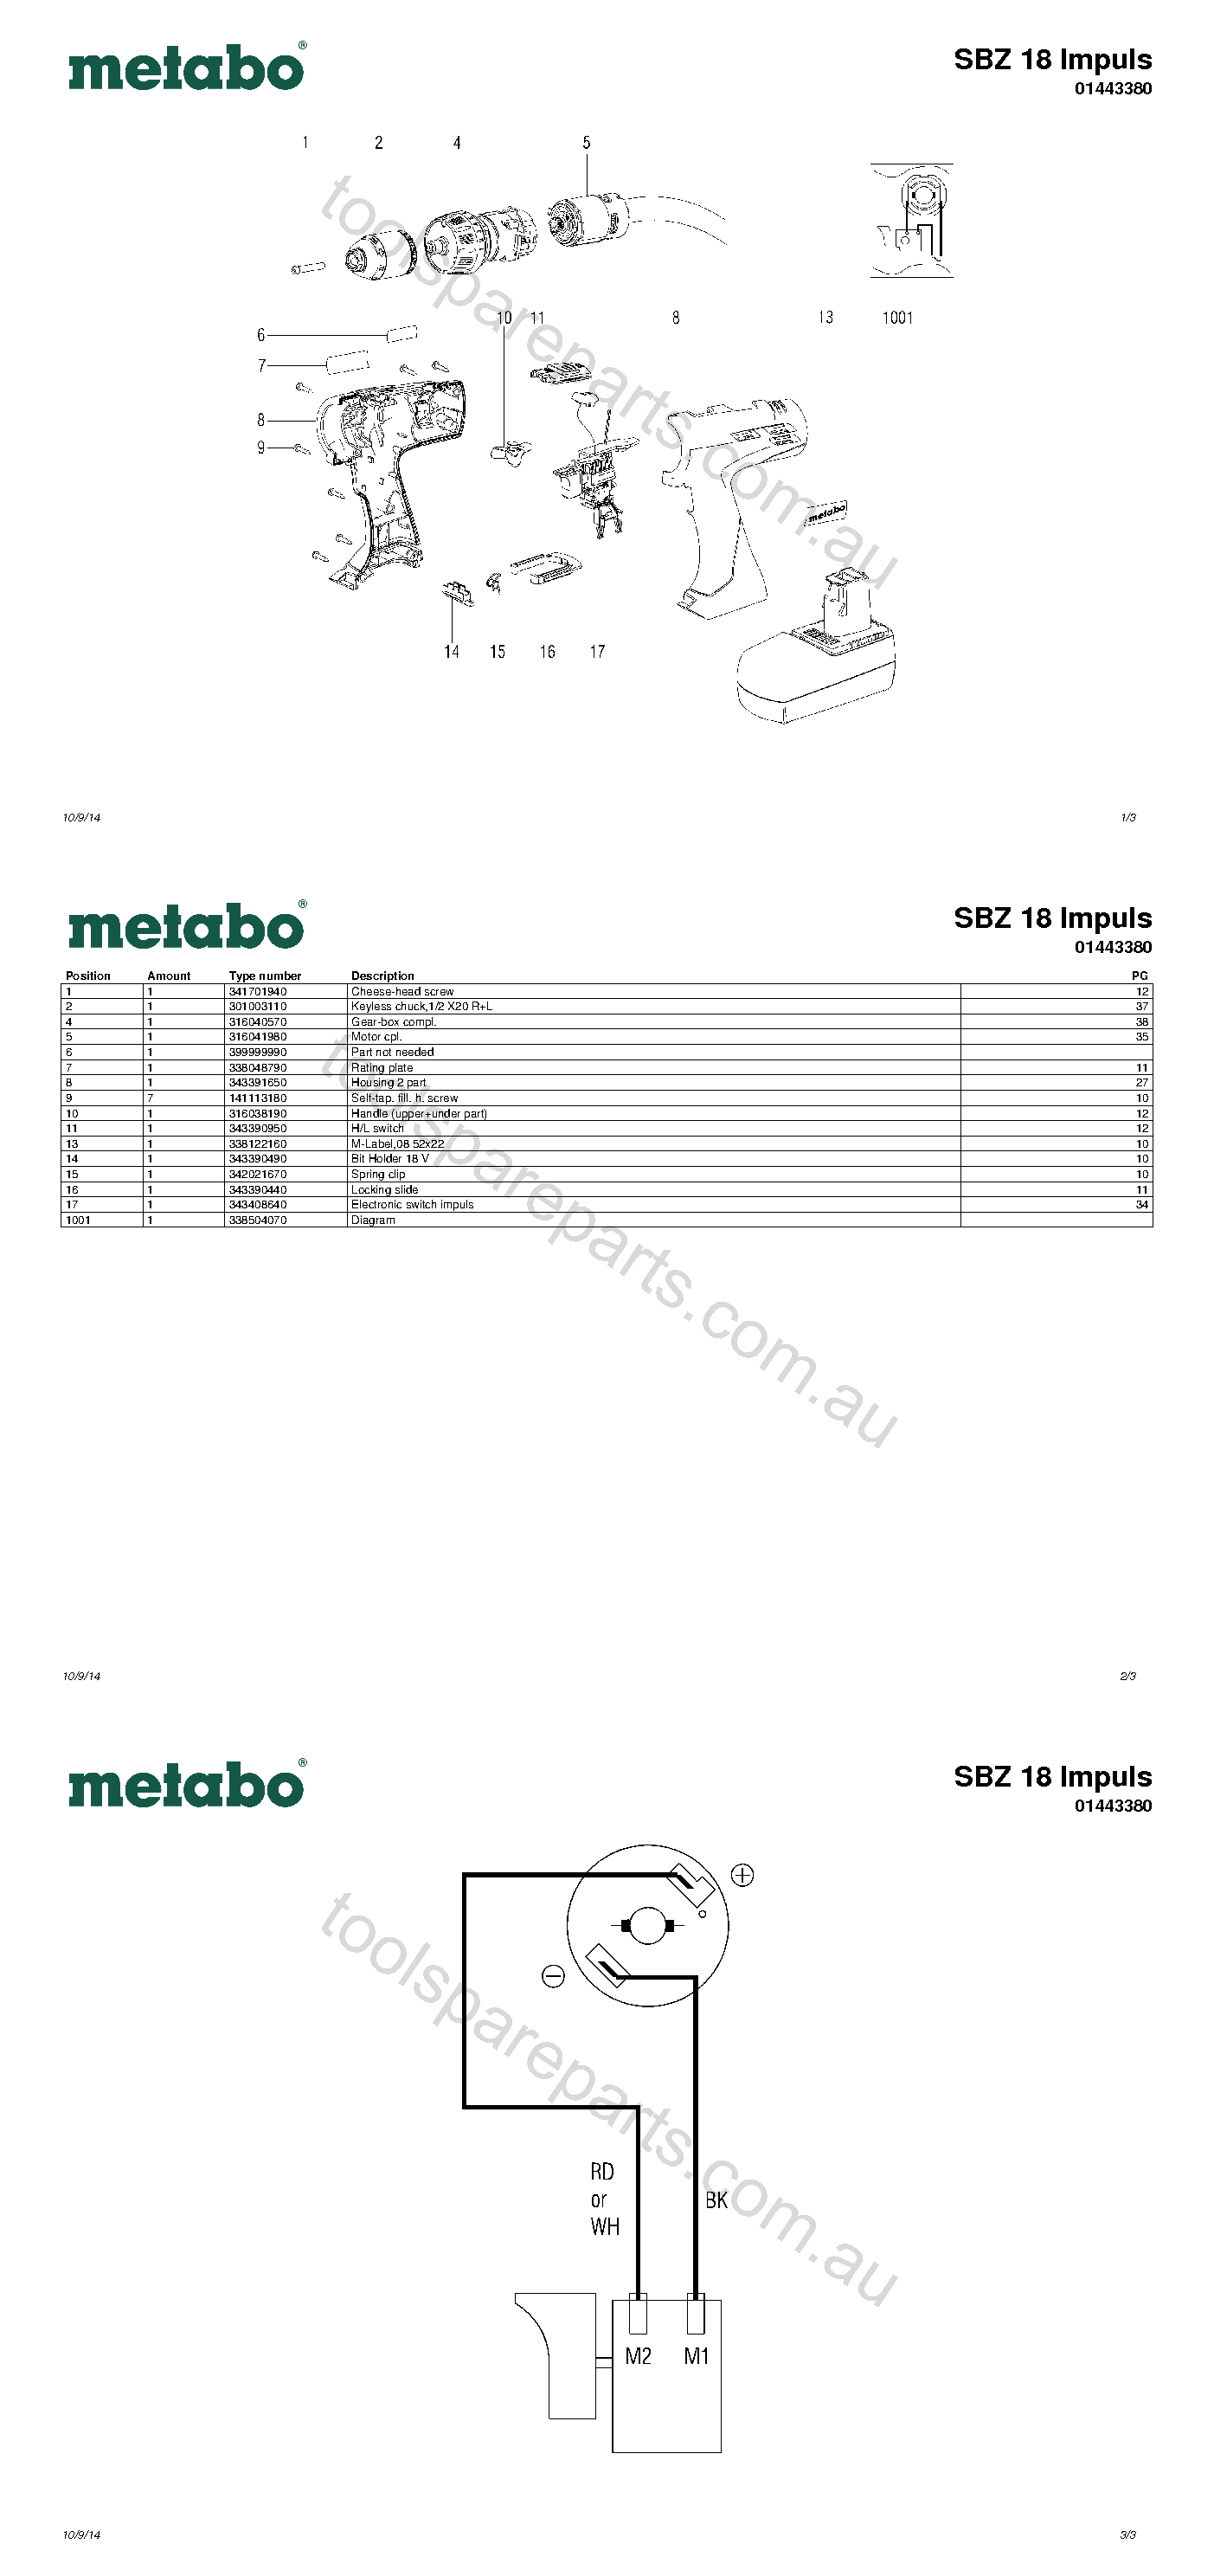 Metabo SBZ 18 Impuls 01443380  Diagram 1